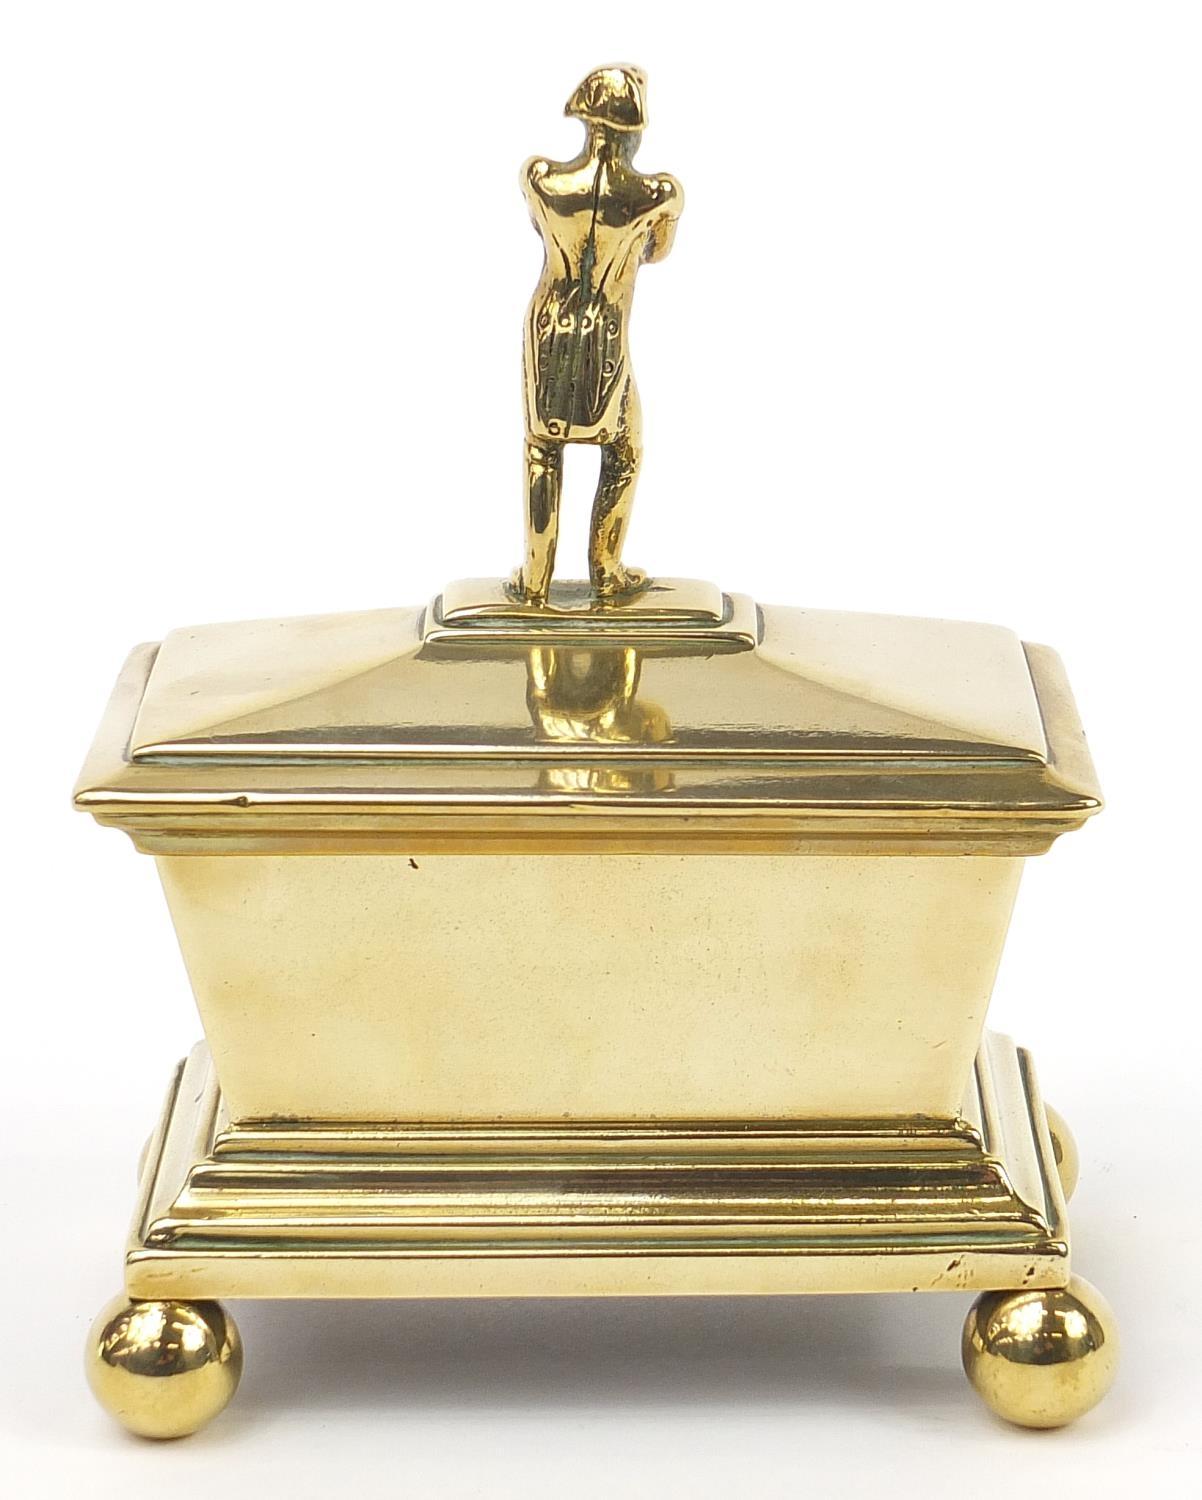 Victorian Napoleon design tobacco box with lead lining, 16cm H x 11.5cm W x 9cm D - Image 4 of 7